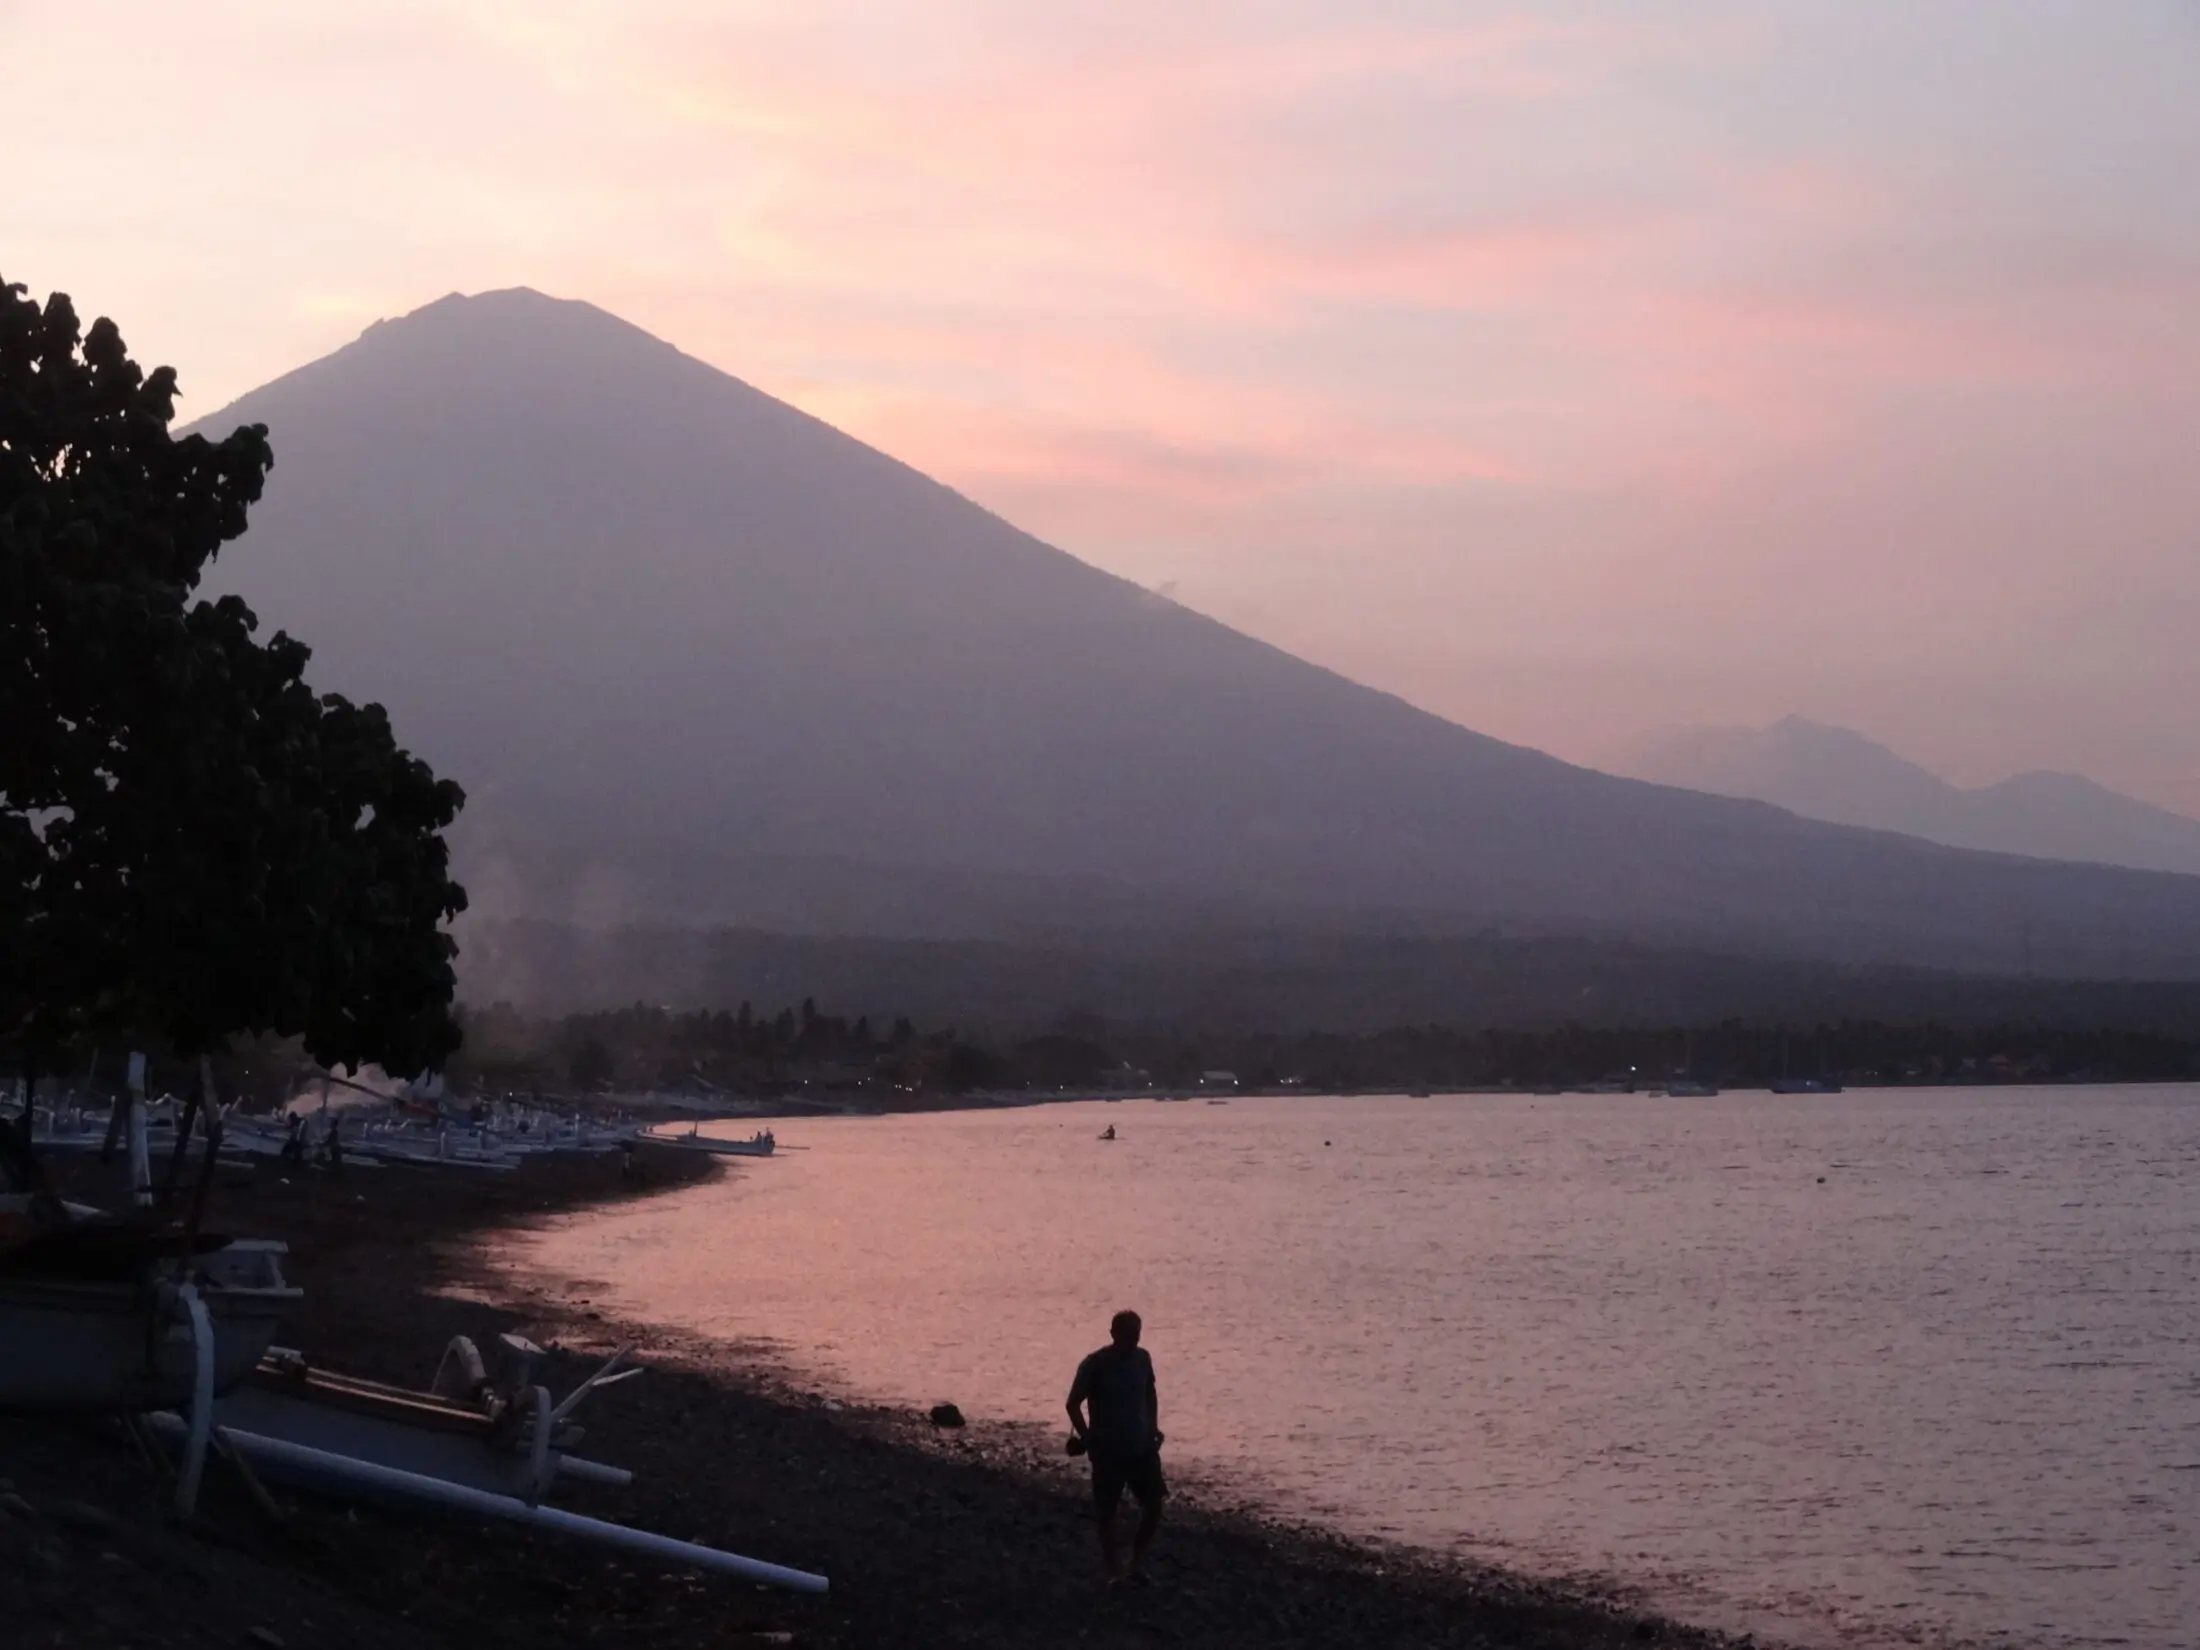 Sonnenuntergang vor dem Vulkan in Amed auf Bali, Indonesien